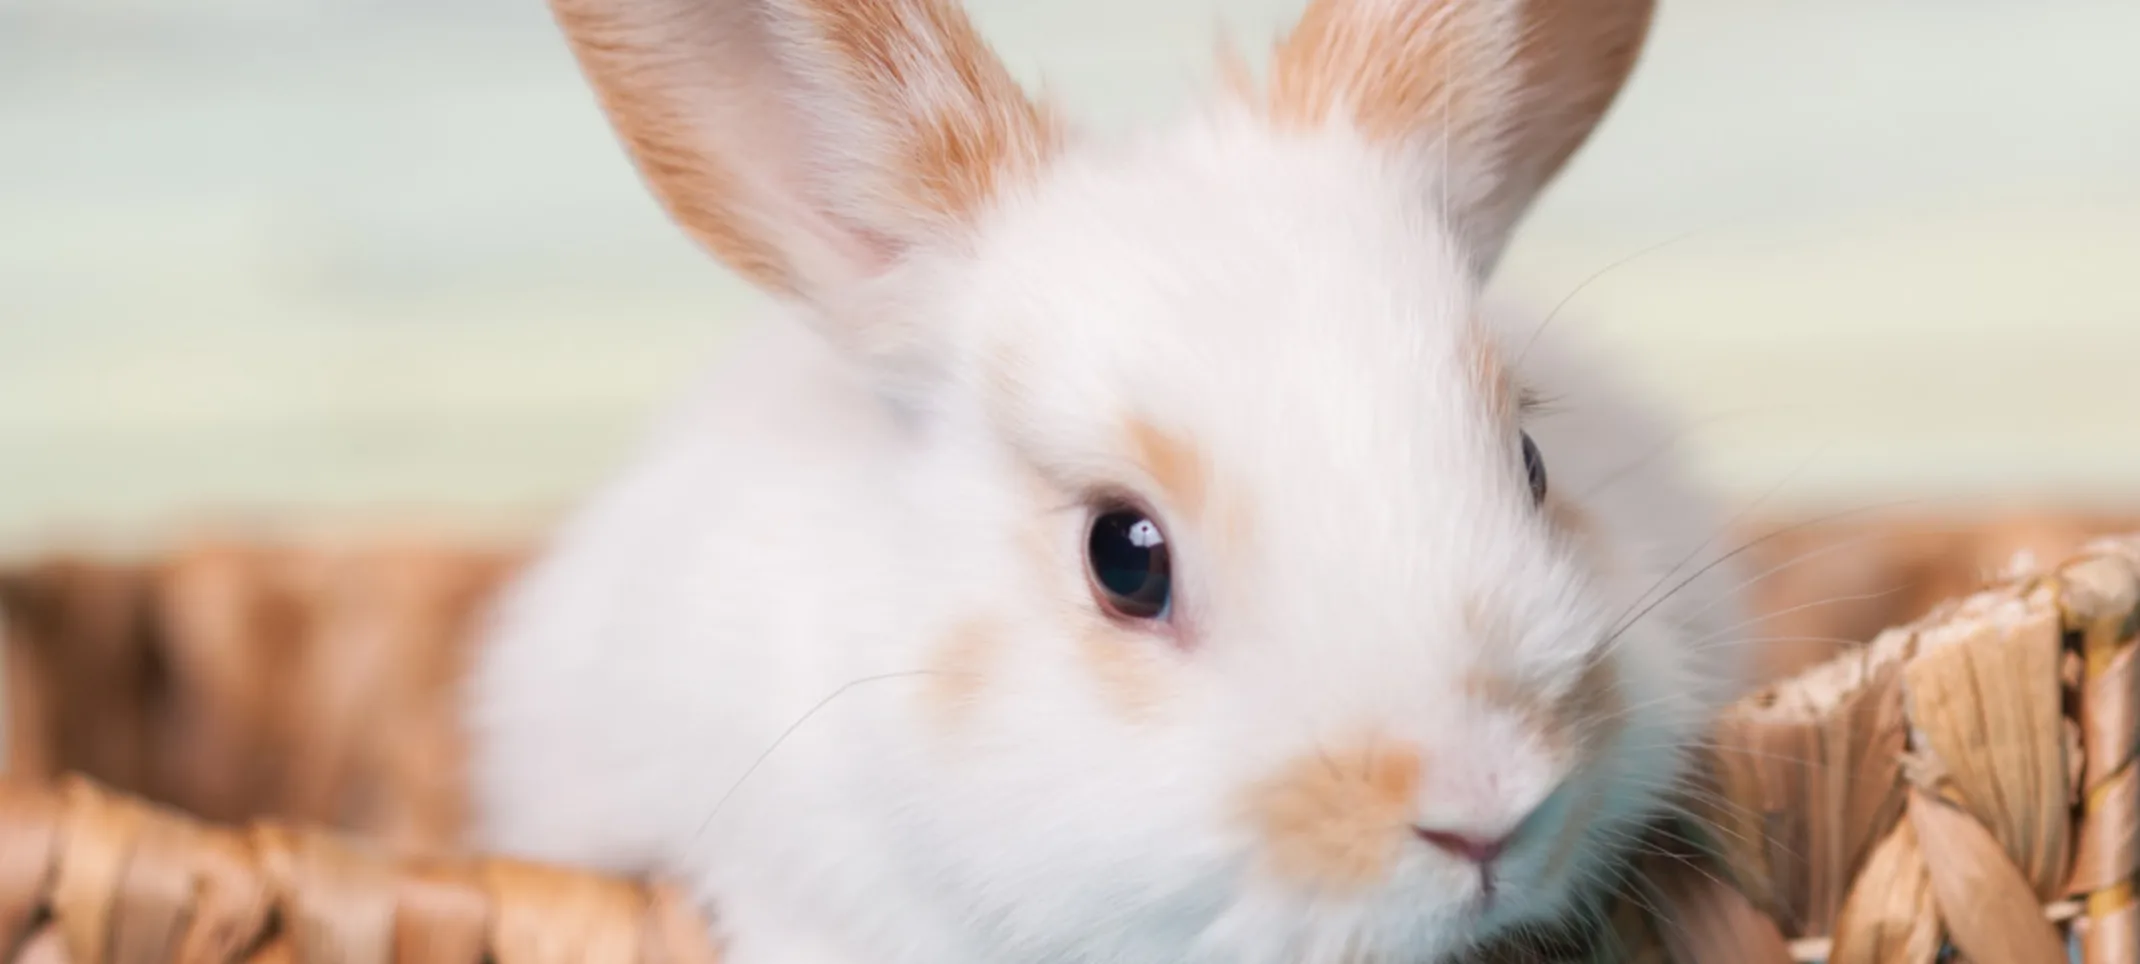 Small bunny inside of basket